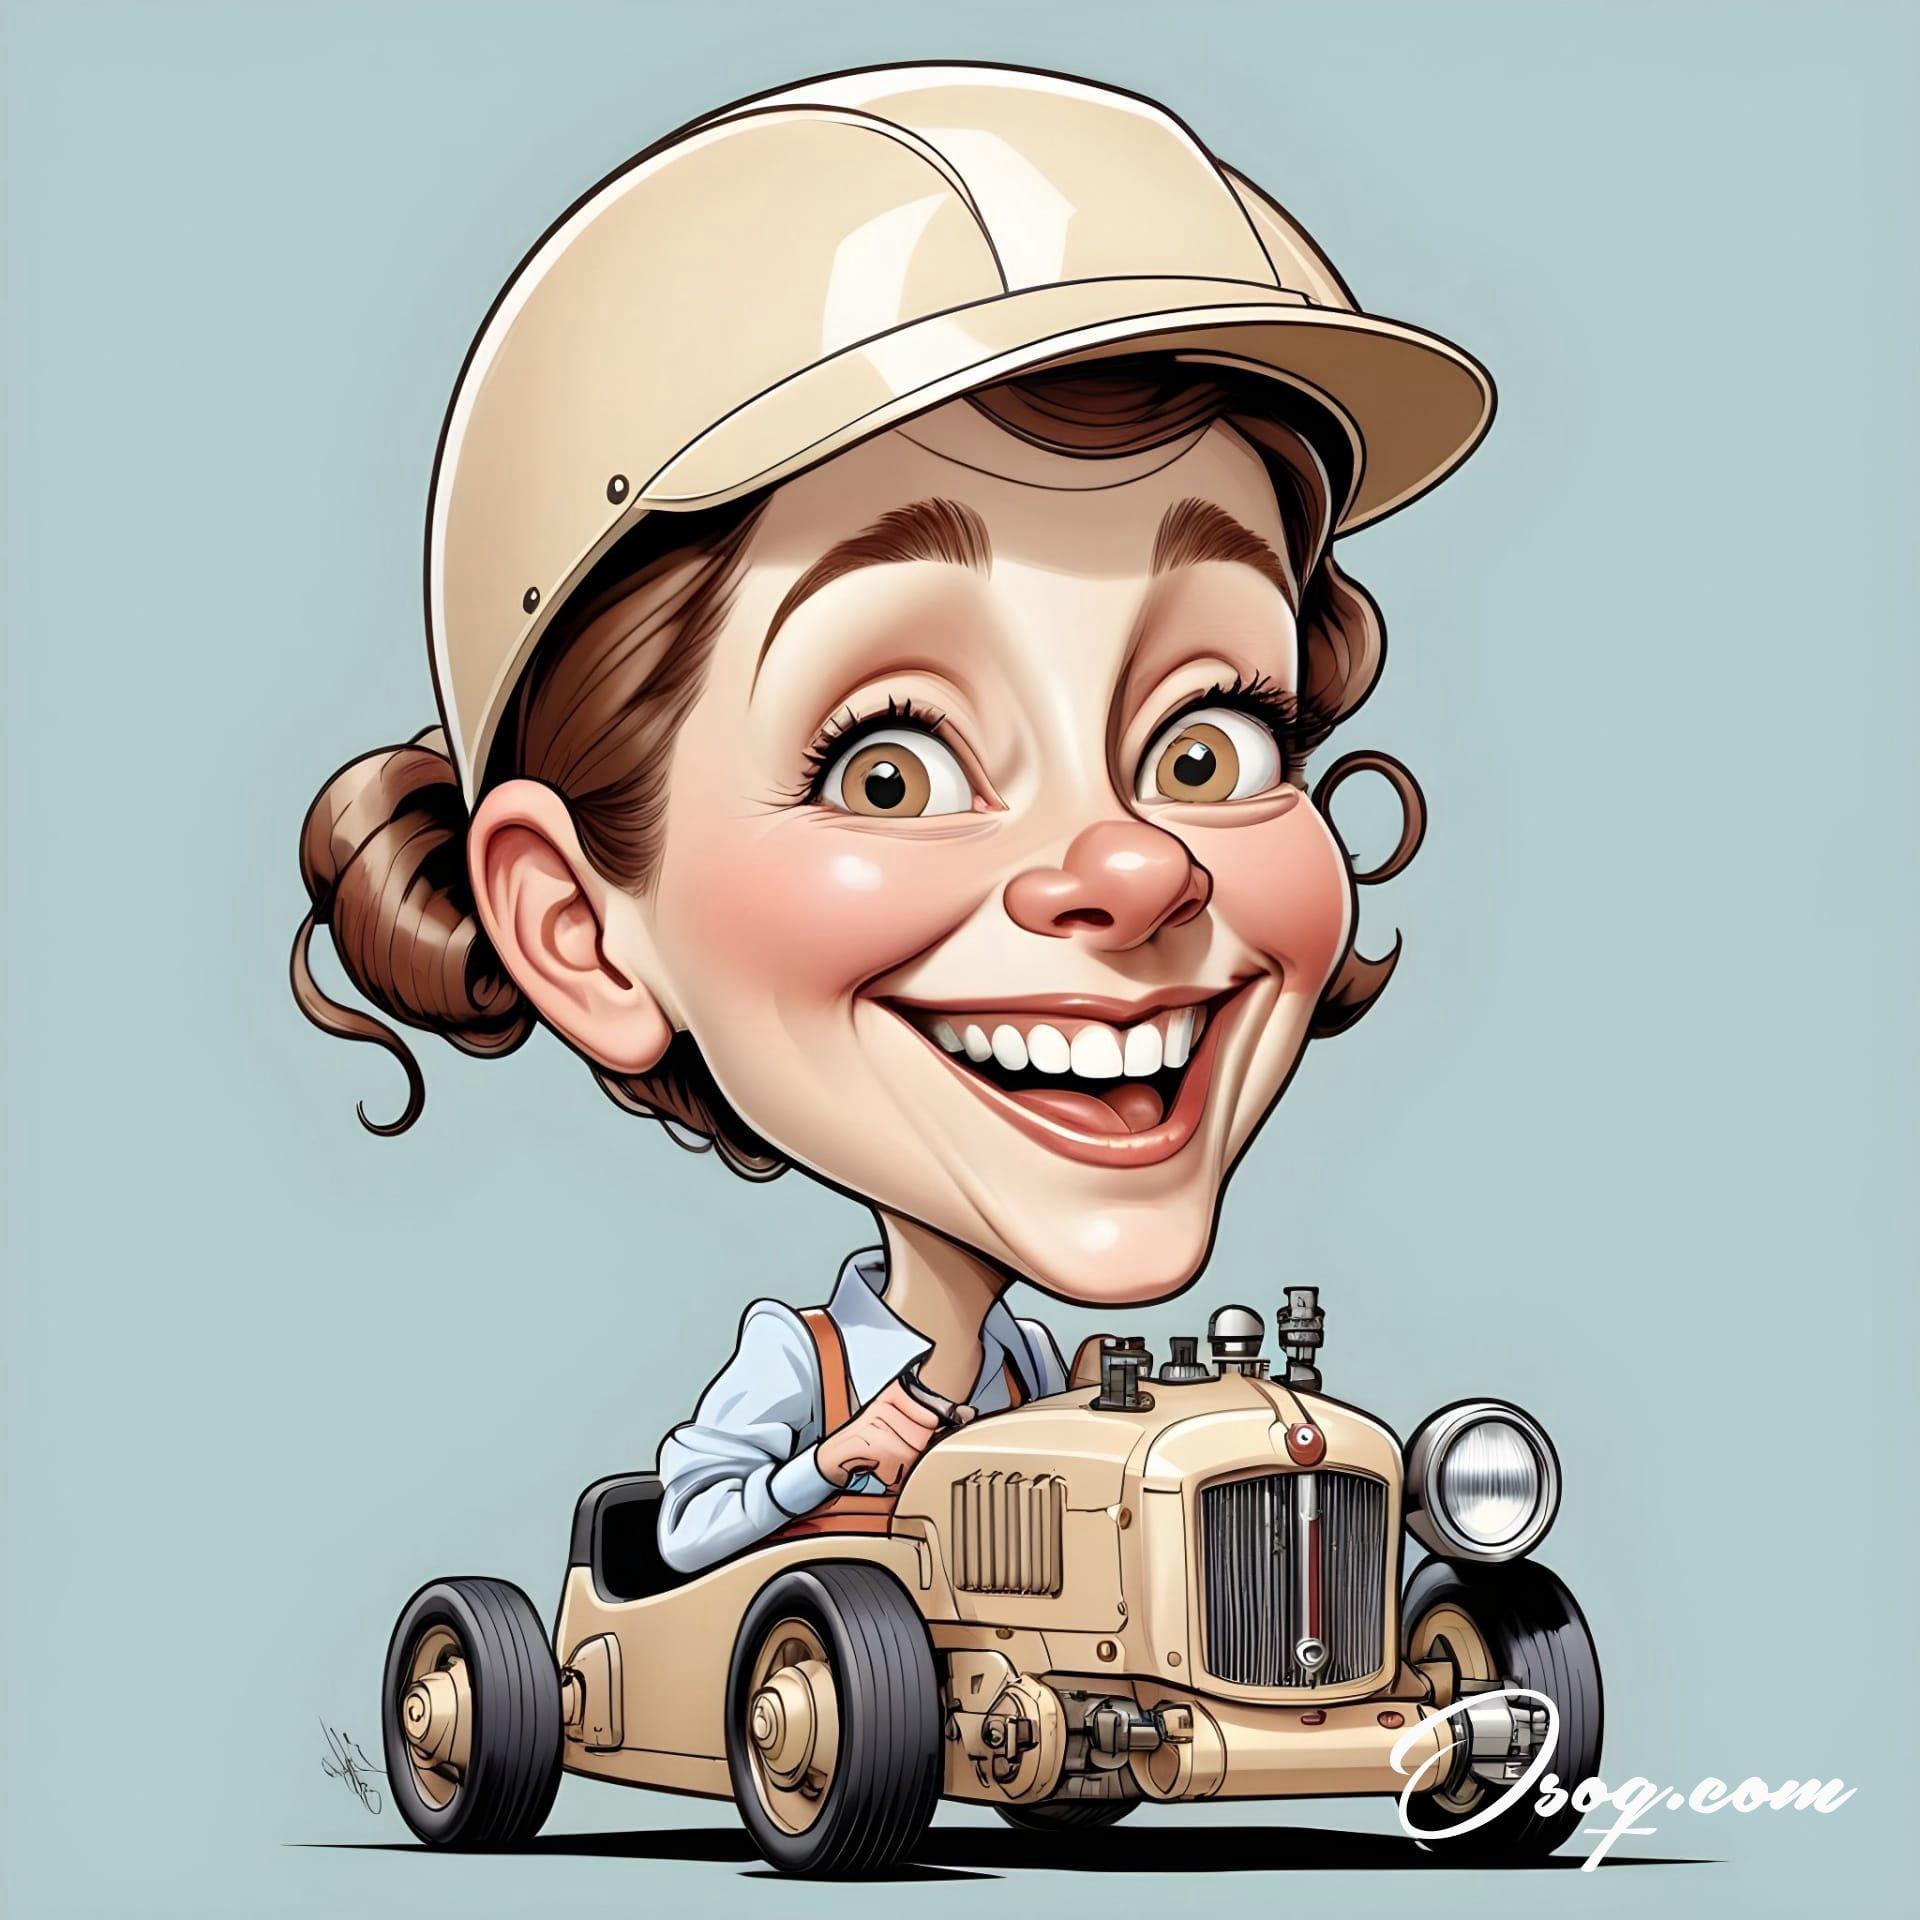 Automotive engineer caricature 02